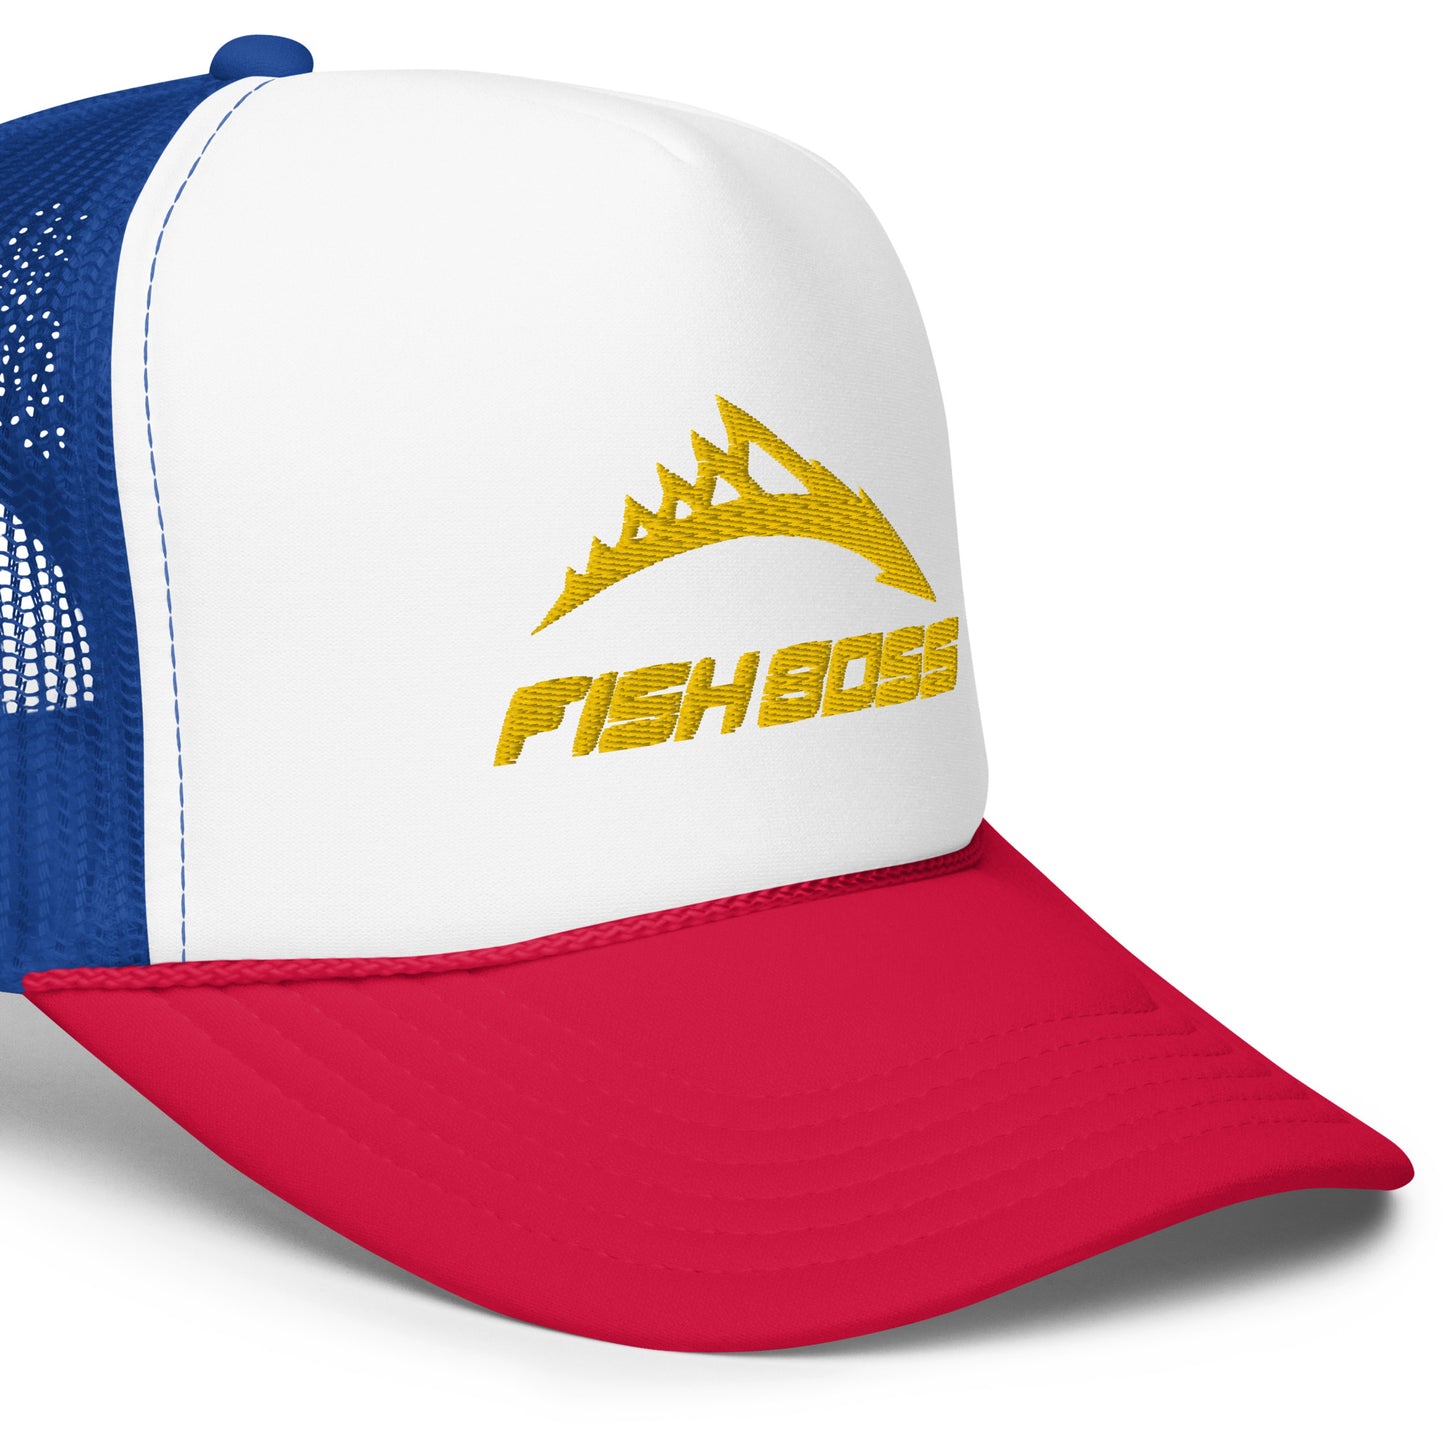 Fish Boss Foam Trucker Hat - Red White Blue Gold / Black